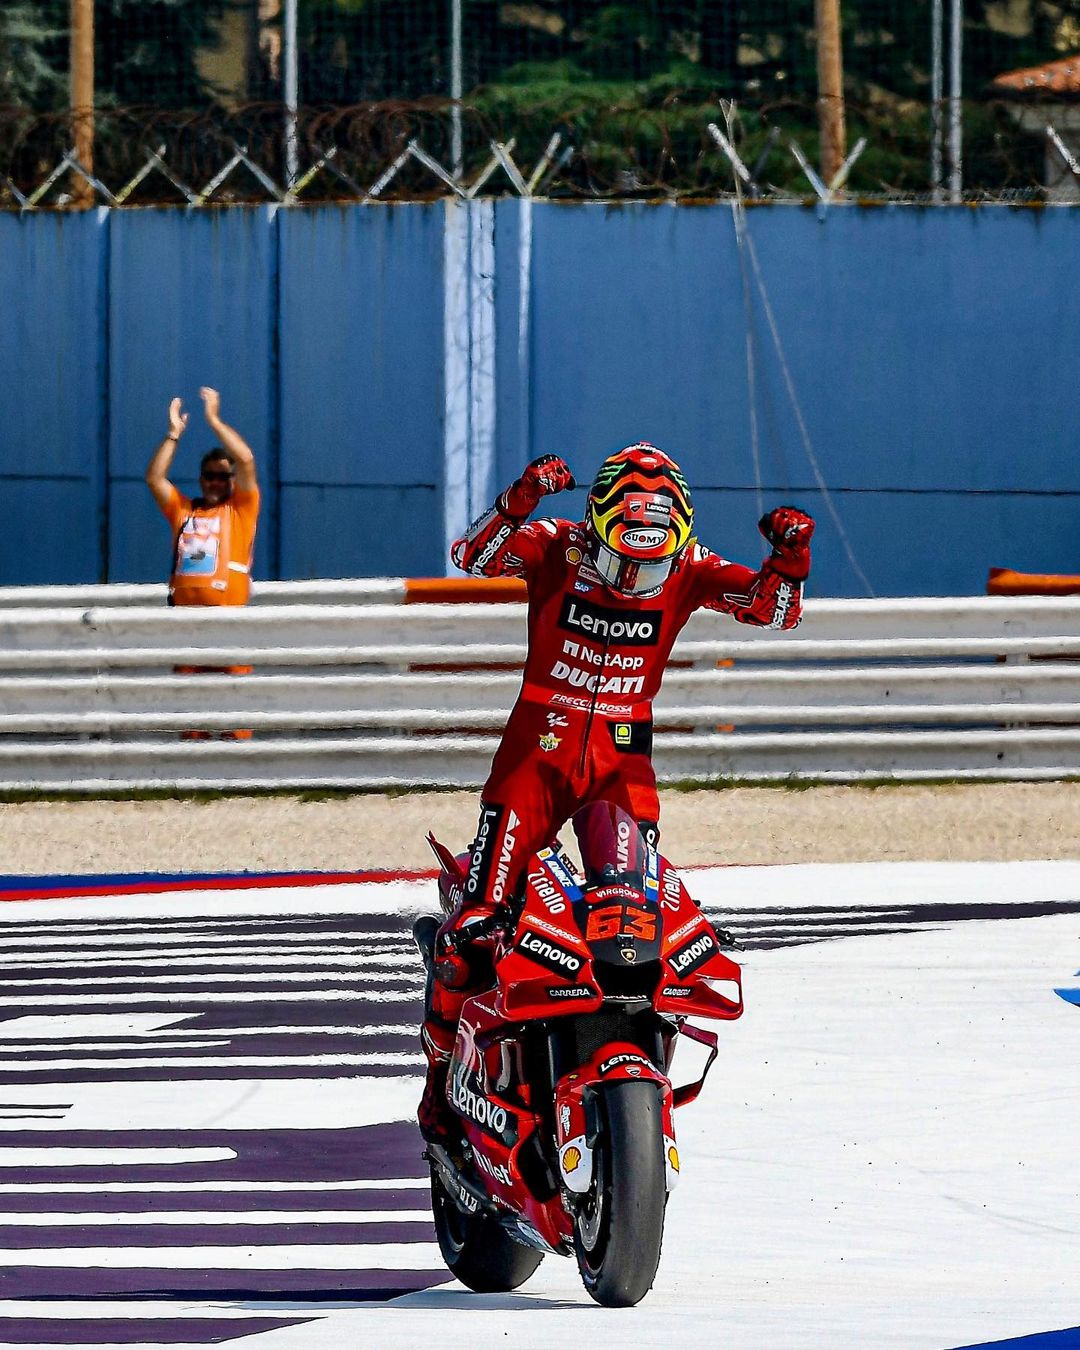 Fantastis! Dapat Miliaran Rupiah Pasca Jadi Juara Dunia MotoGP 2022, Francesco Bagnaia 'Auto Tajir', Nih!